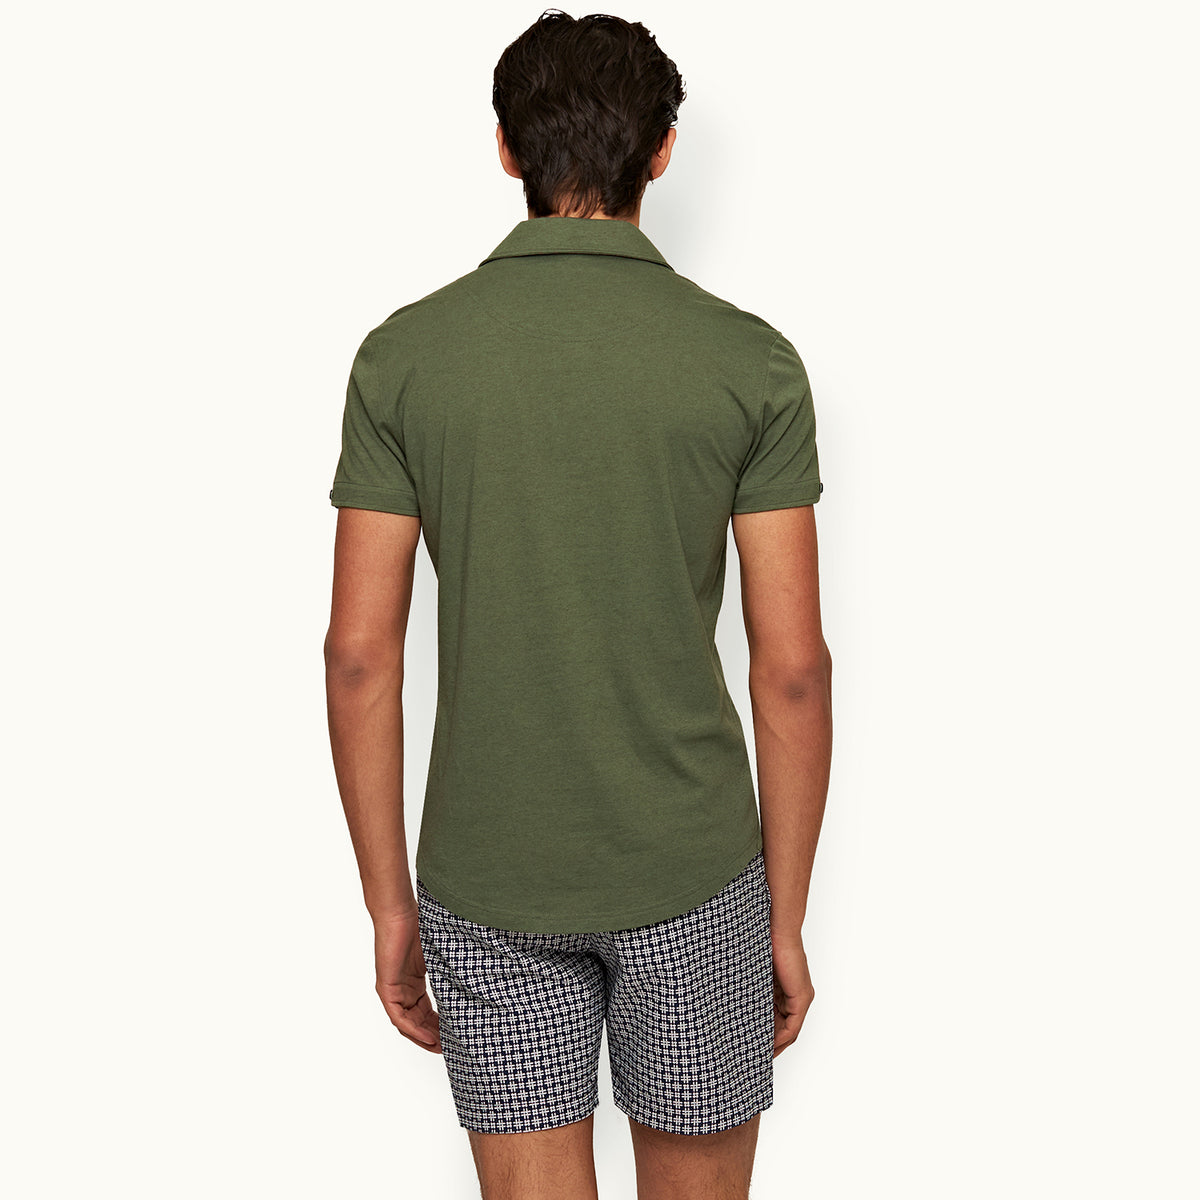 James Bond Green Cotton Silk Polo Shirt - By Orlebar Brown